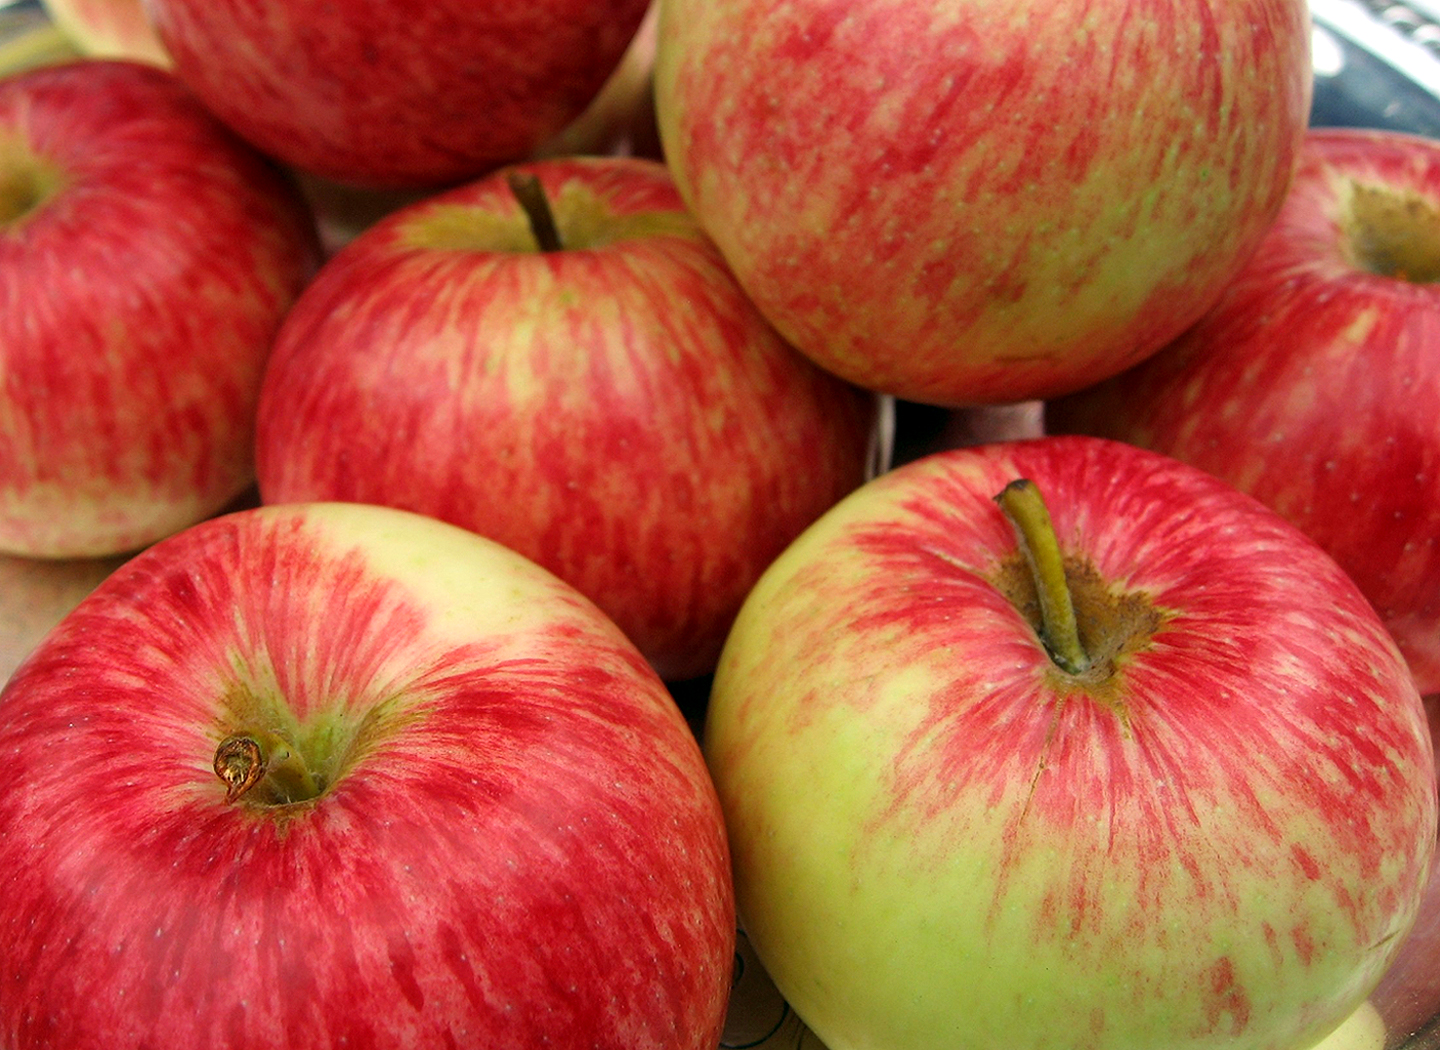 'Duchess of Oldenburg' apple